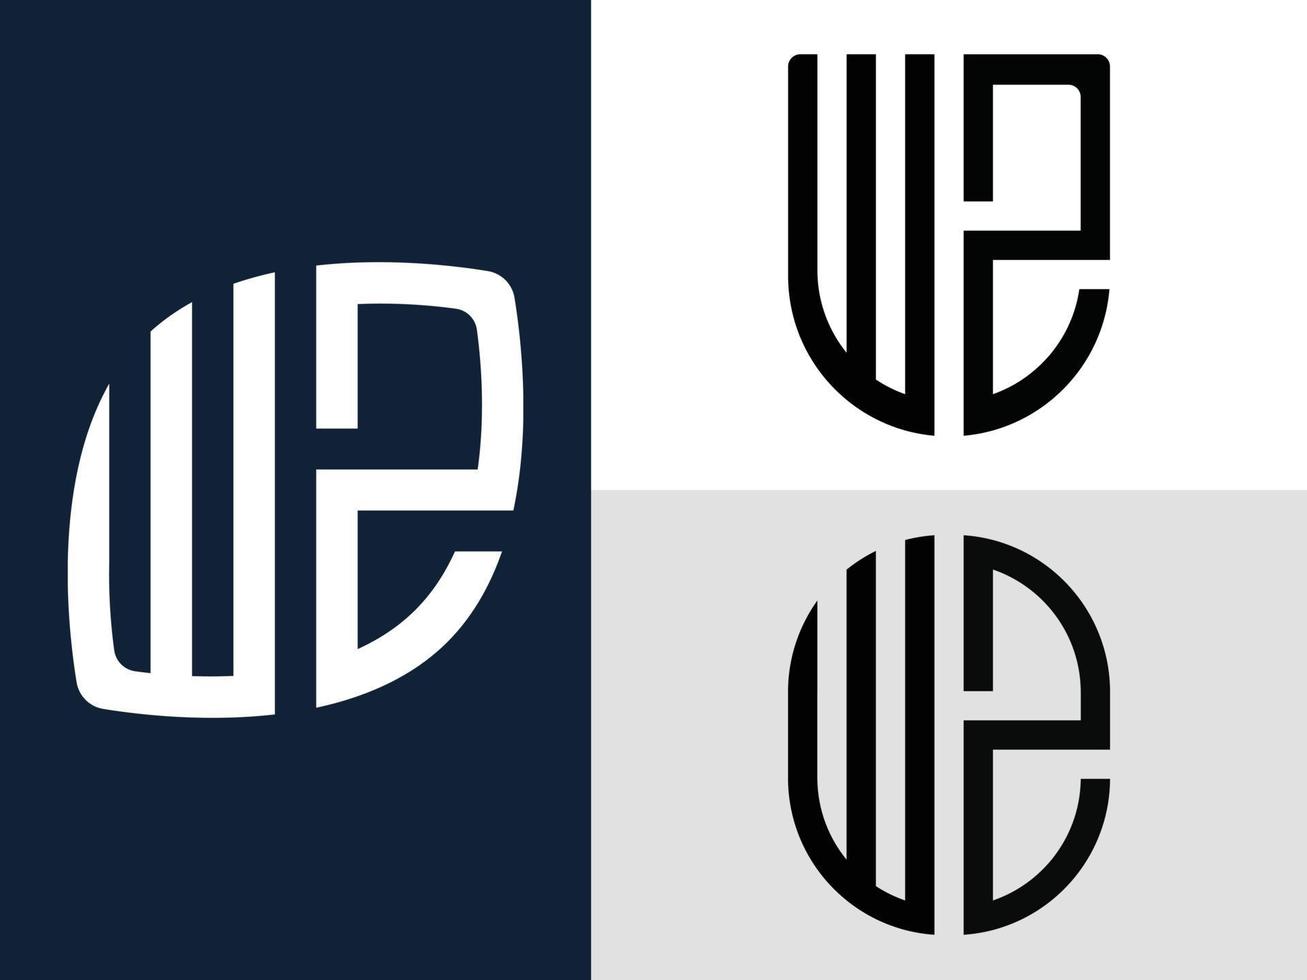 kreative anfangsbuchstaben wz logo designs paket. vektor